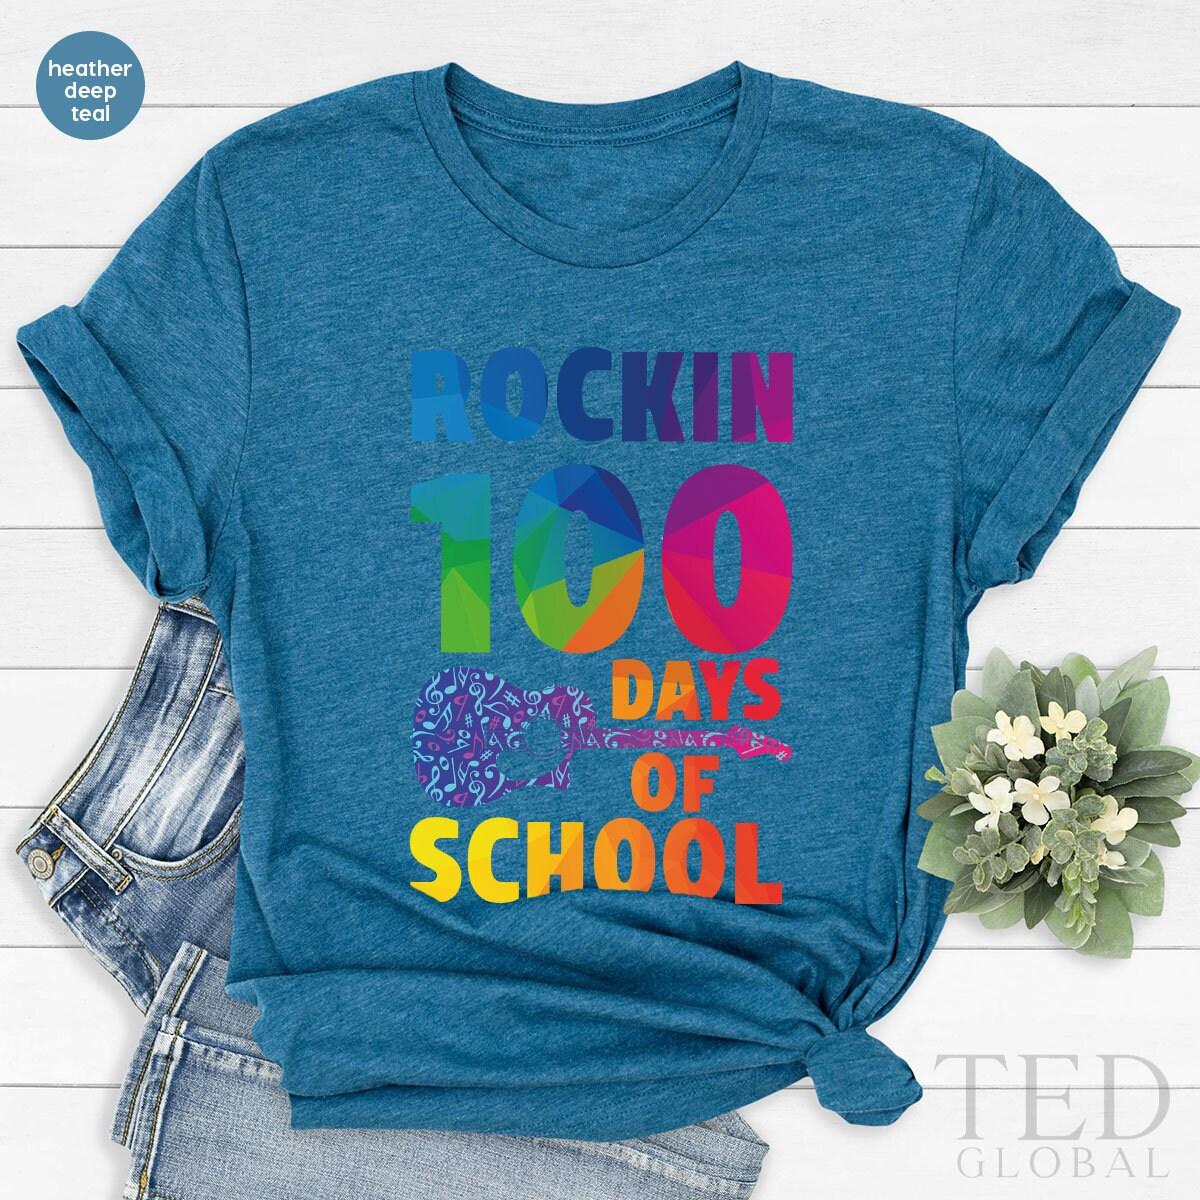 100 Day Of School Shirt, Funny Rockin T Shirt, Back To School T Shirt, Cute Kindergarten Shirts, Cute School T-Shirt, Gift For School - Fastdeliverytees.com